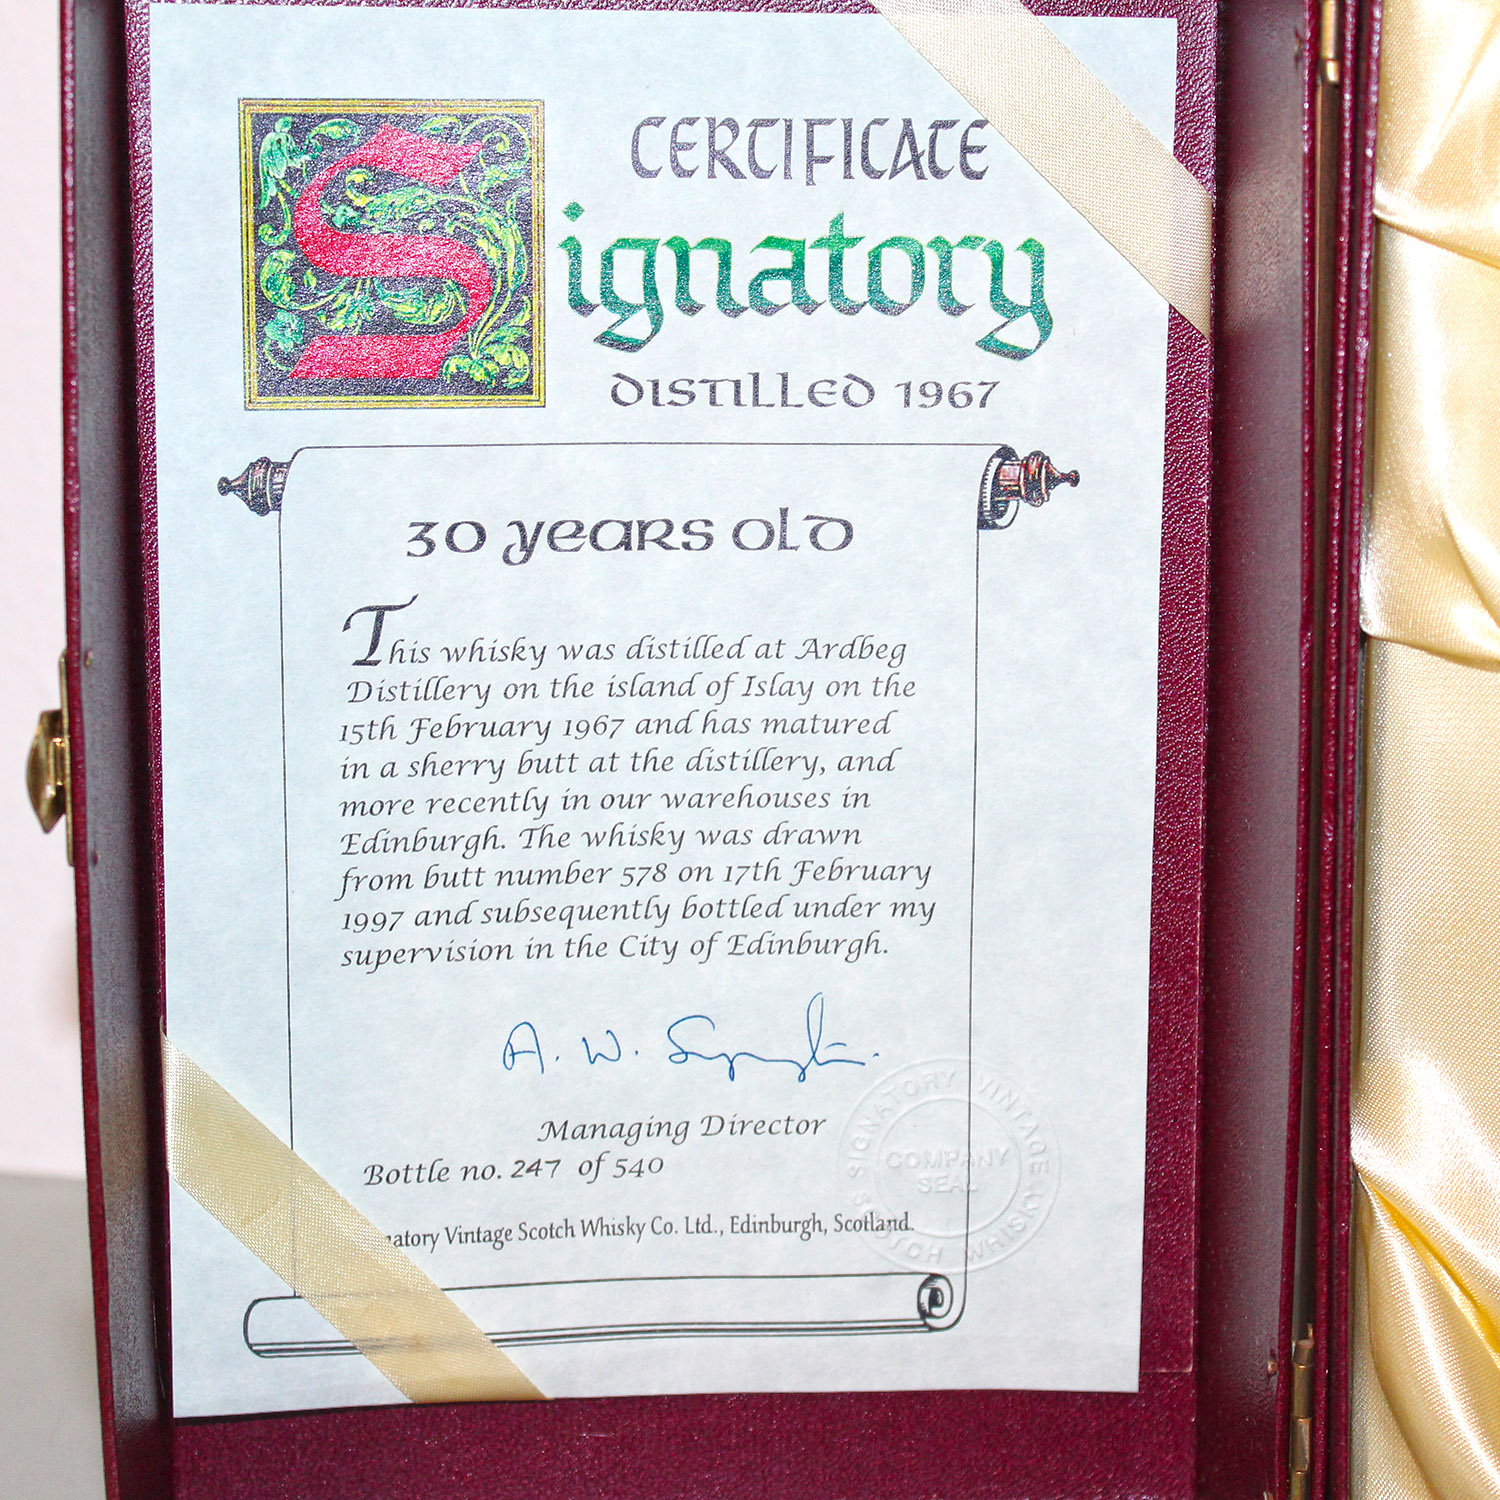 Ardbeg 1967 30 Years Old Signatory Vintage certificate